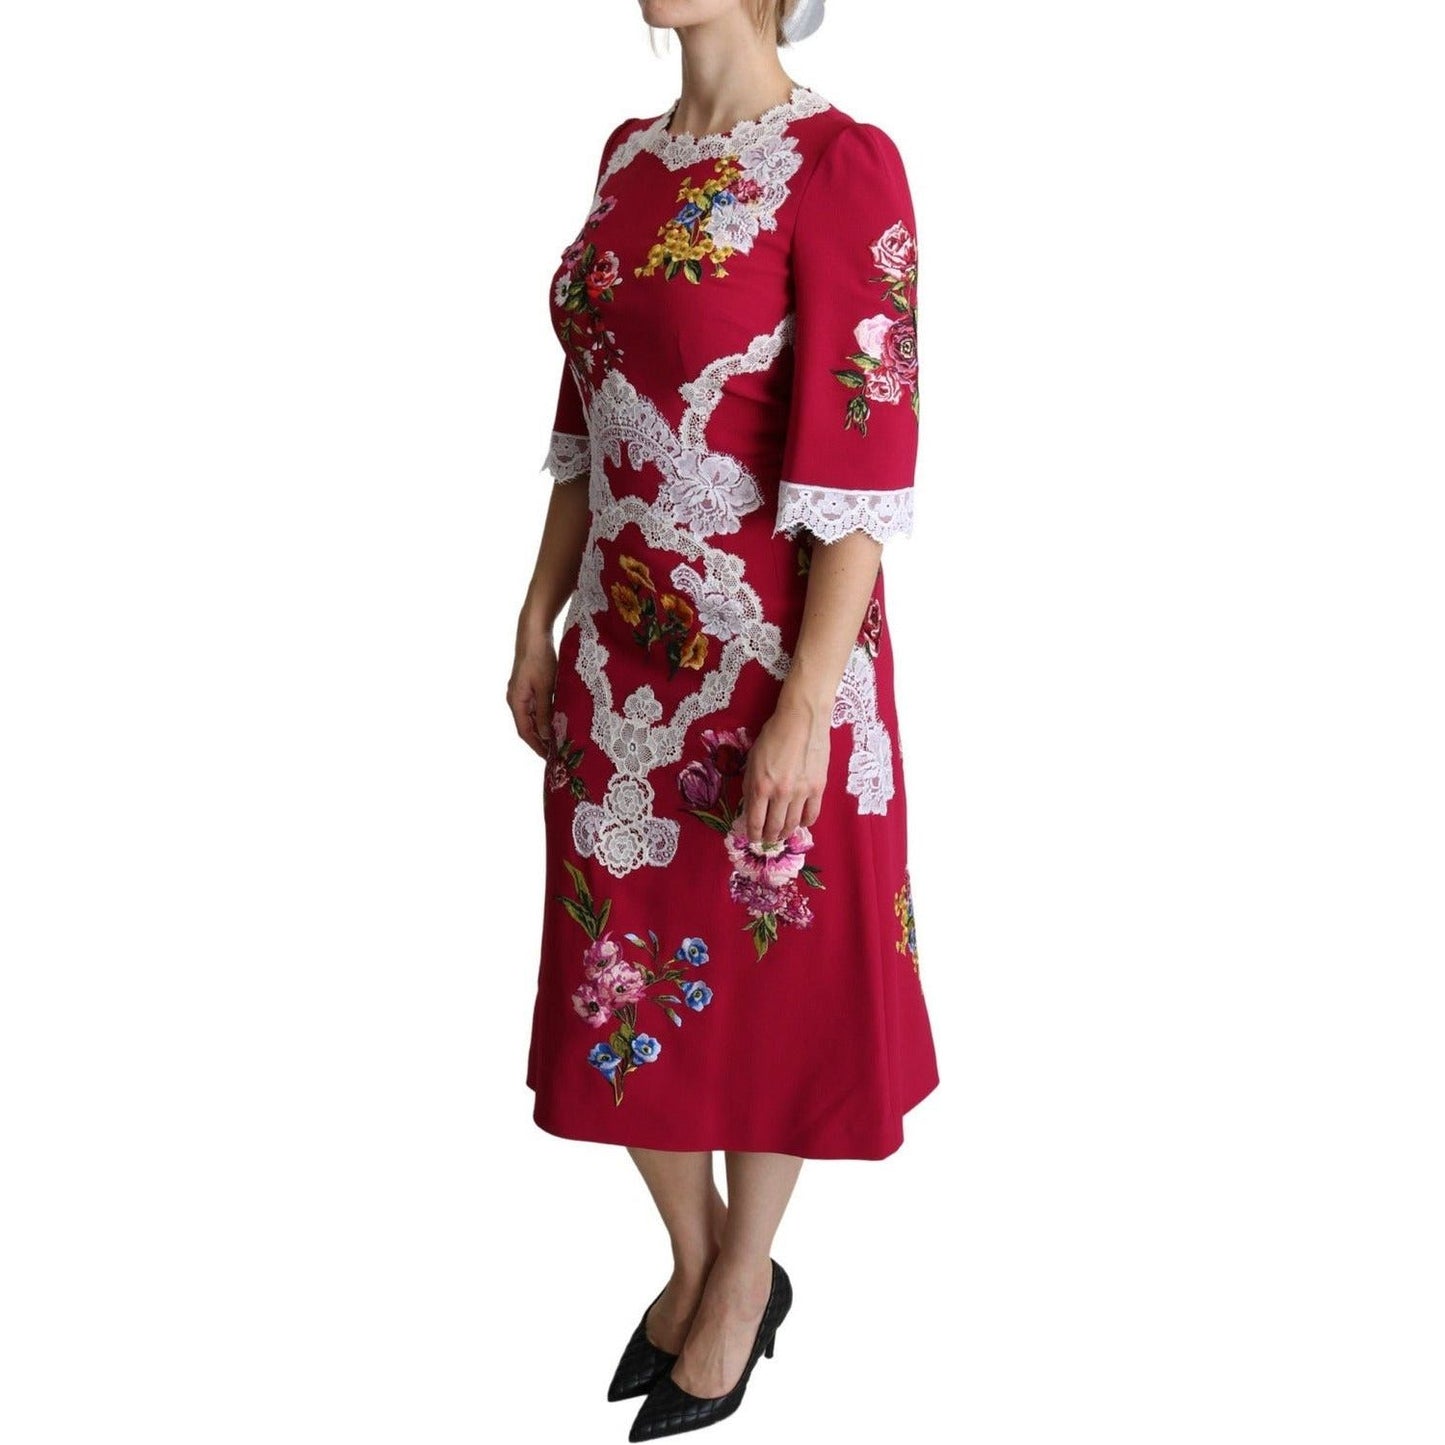 Dolce & Gabbana Floral Embroidered Sheath Midi Dress red-floral-embroidered-sheath-midi-dress